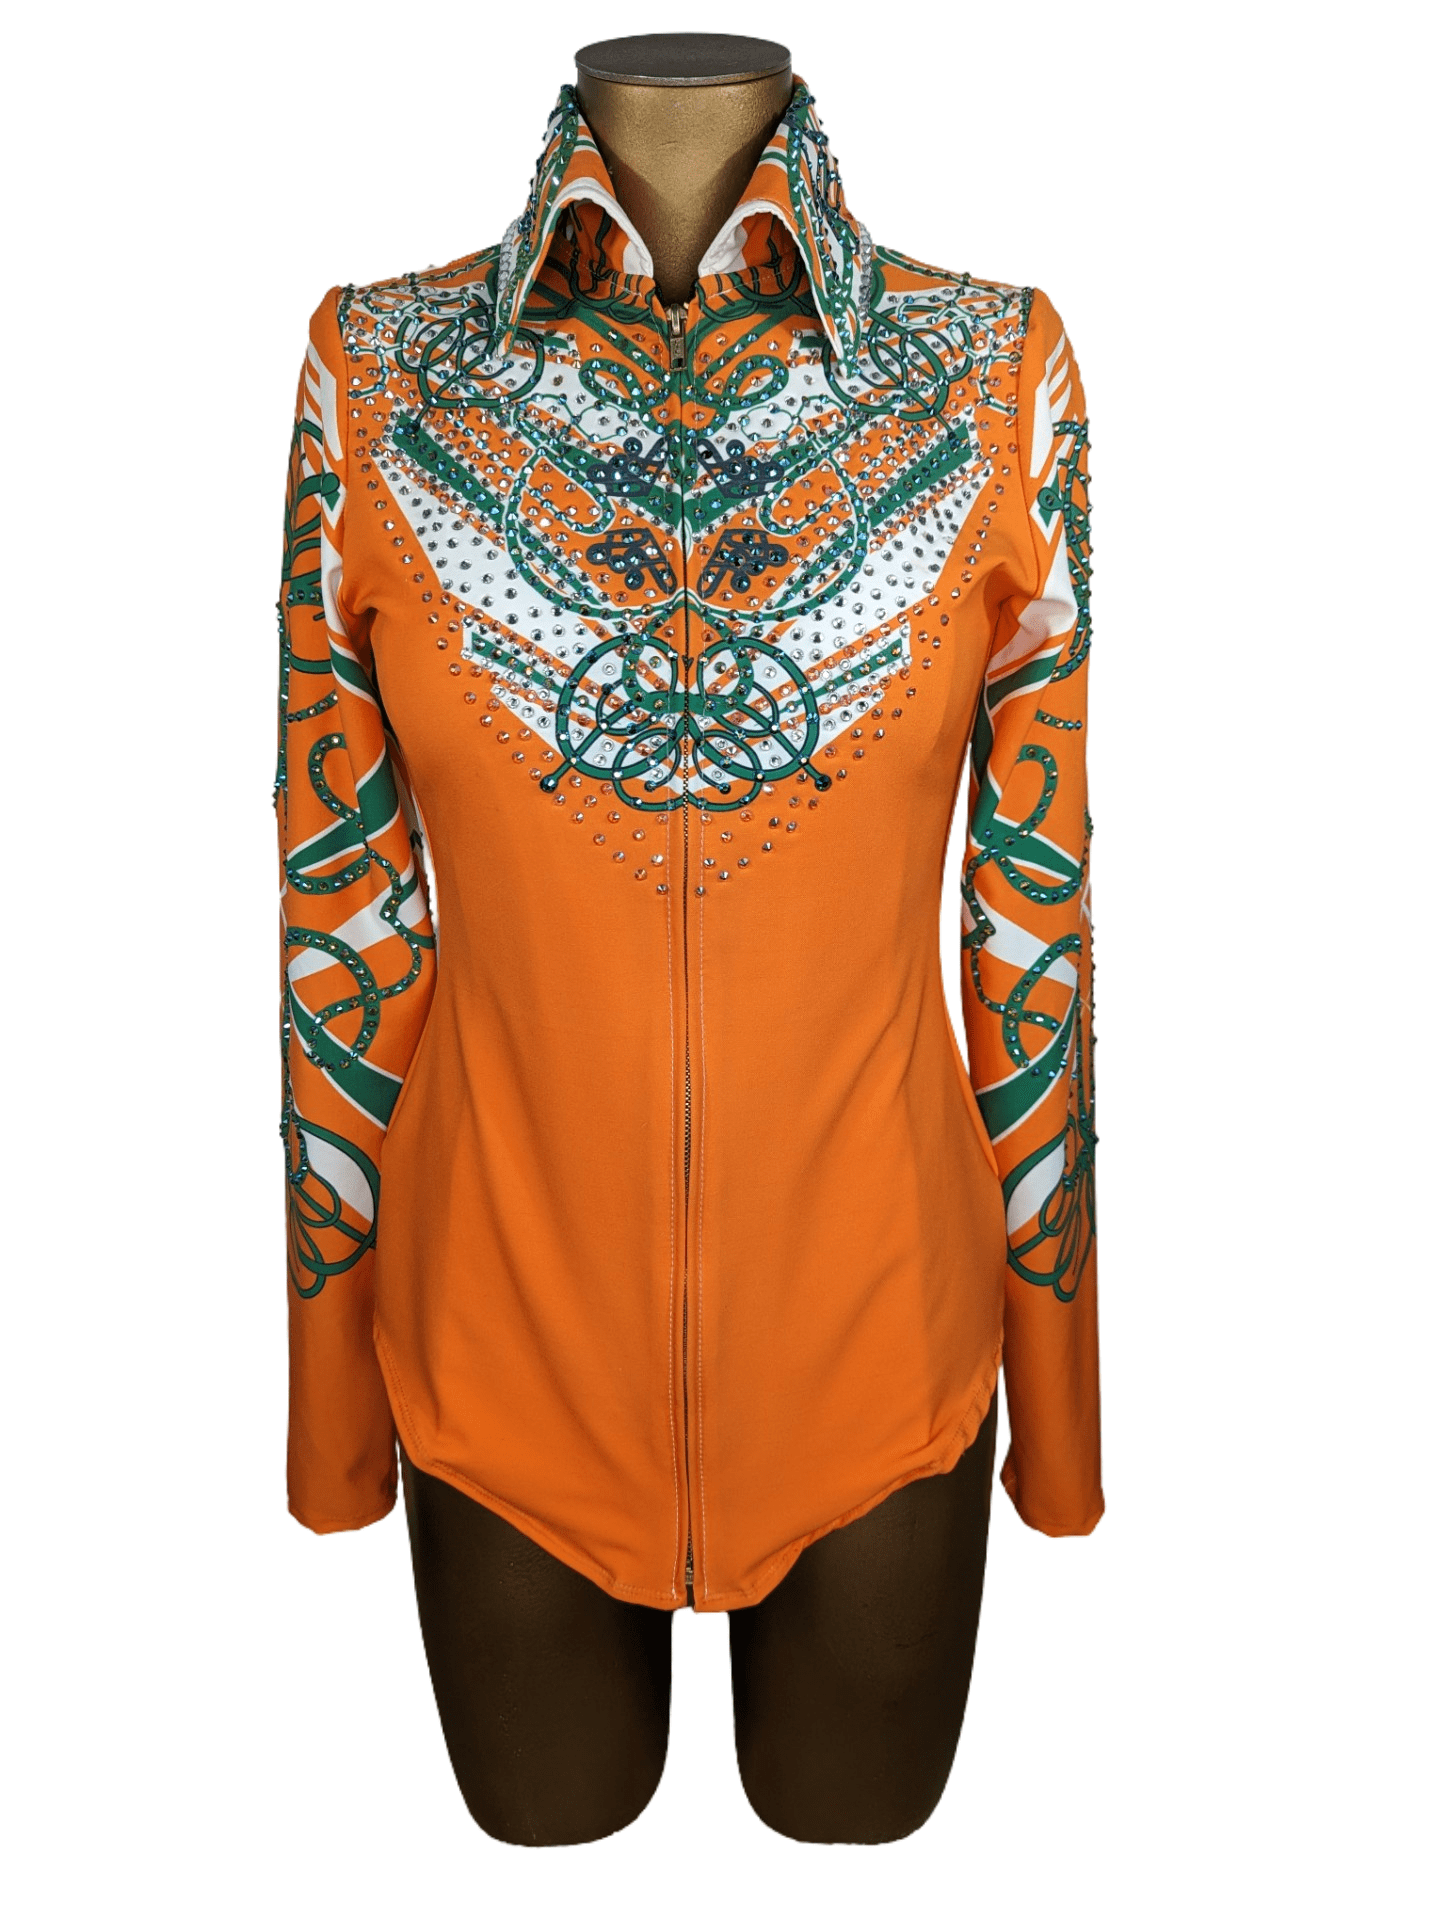 sparkle-ridge-western-show-shirts-womens-rodeo-shirts-barrel-racing-shirts-horse-show-jacket-orange-jacket-front.png